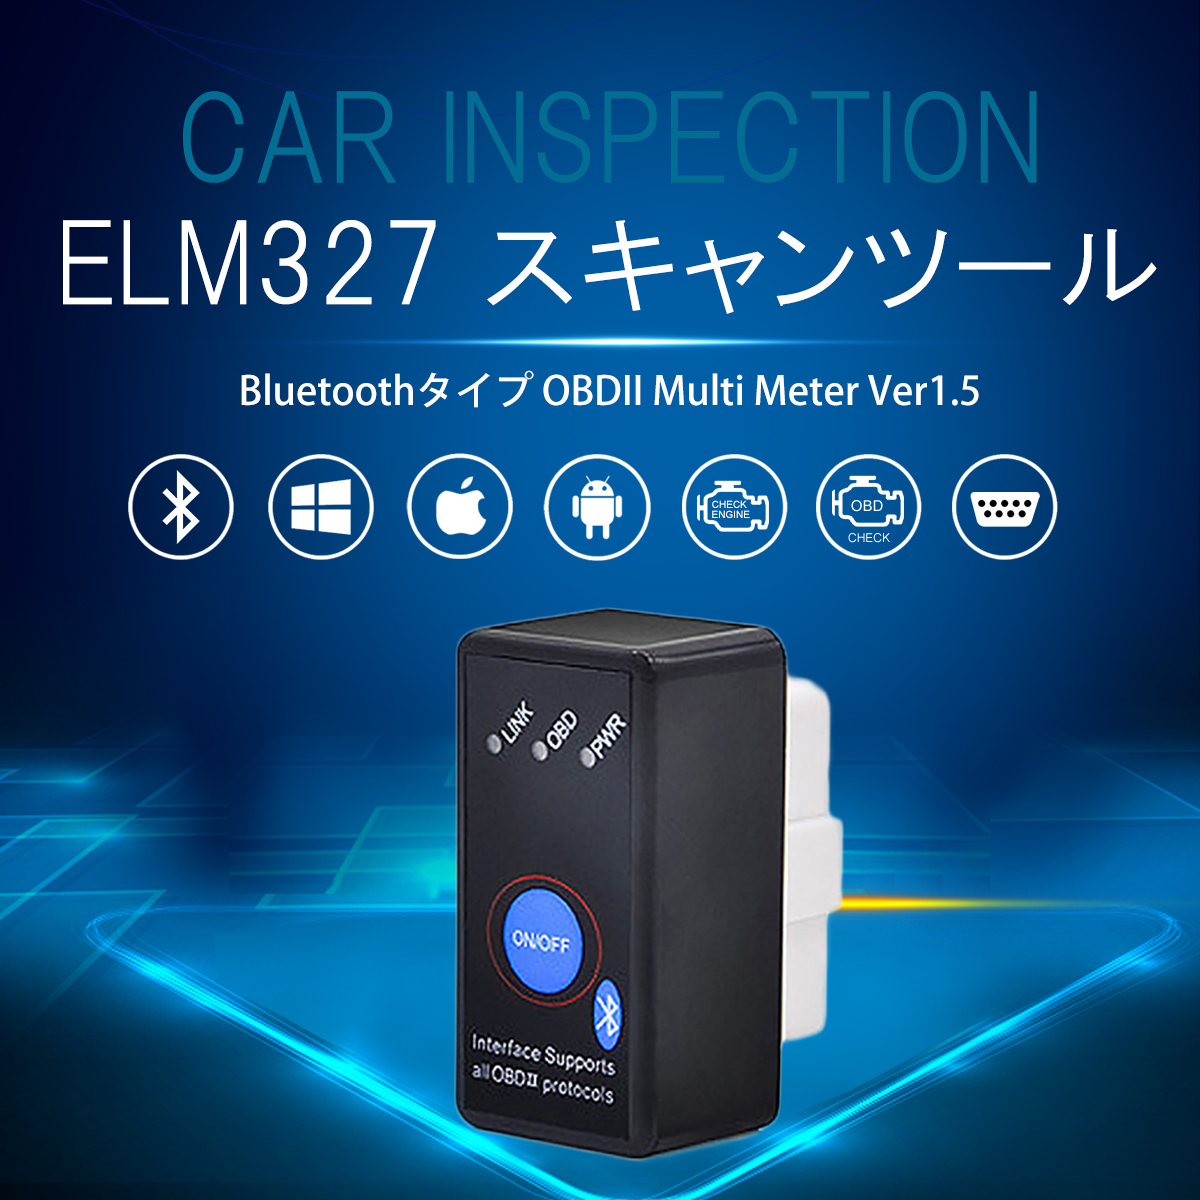 ELM327 Bluetooth OBD2汎用スキャンツール V1.5 ON/OFFスイッチ付き iOS Android Windows対応 iPhone iPad スマホ タブレット カー情報診断ツール OBDII マルチメーター SDM便送料無料 1ヶ月保証